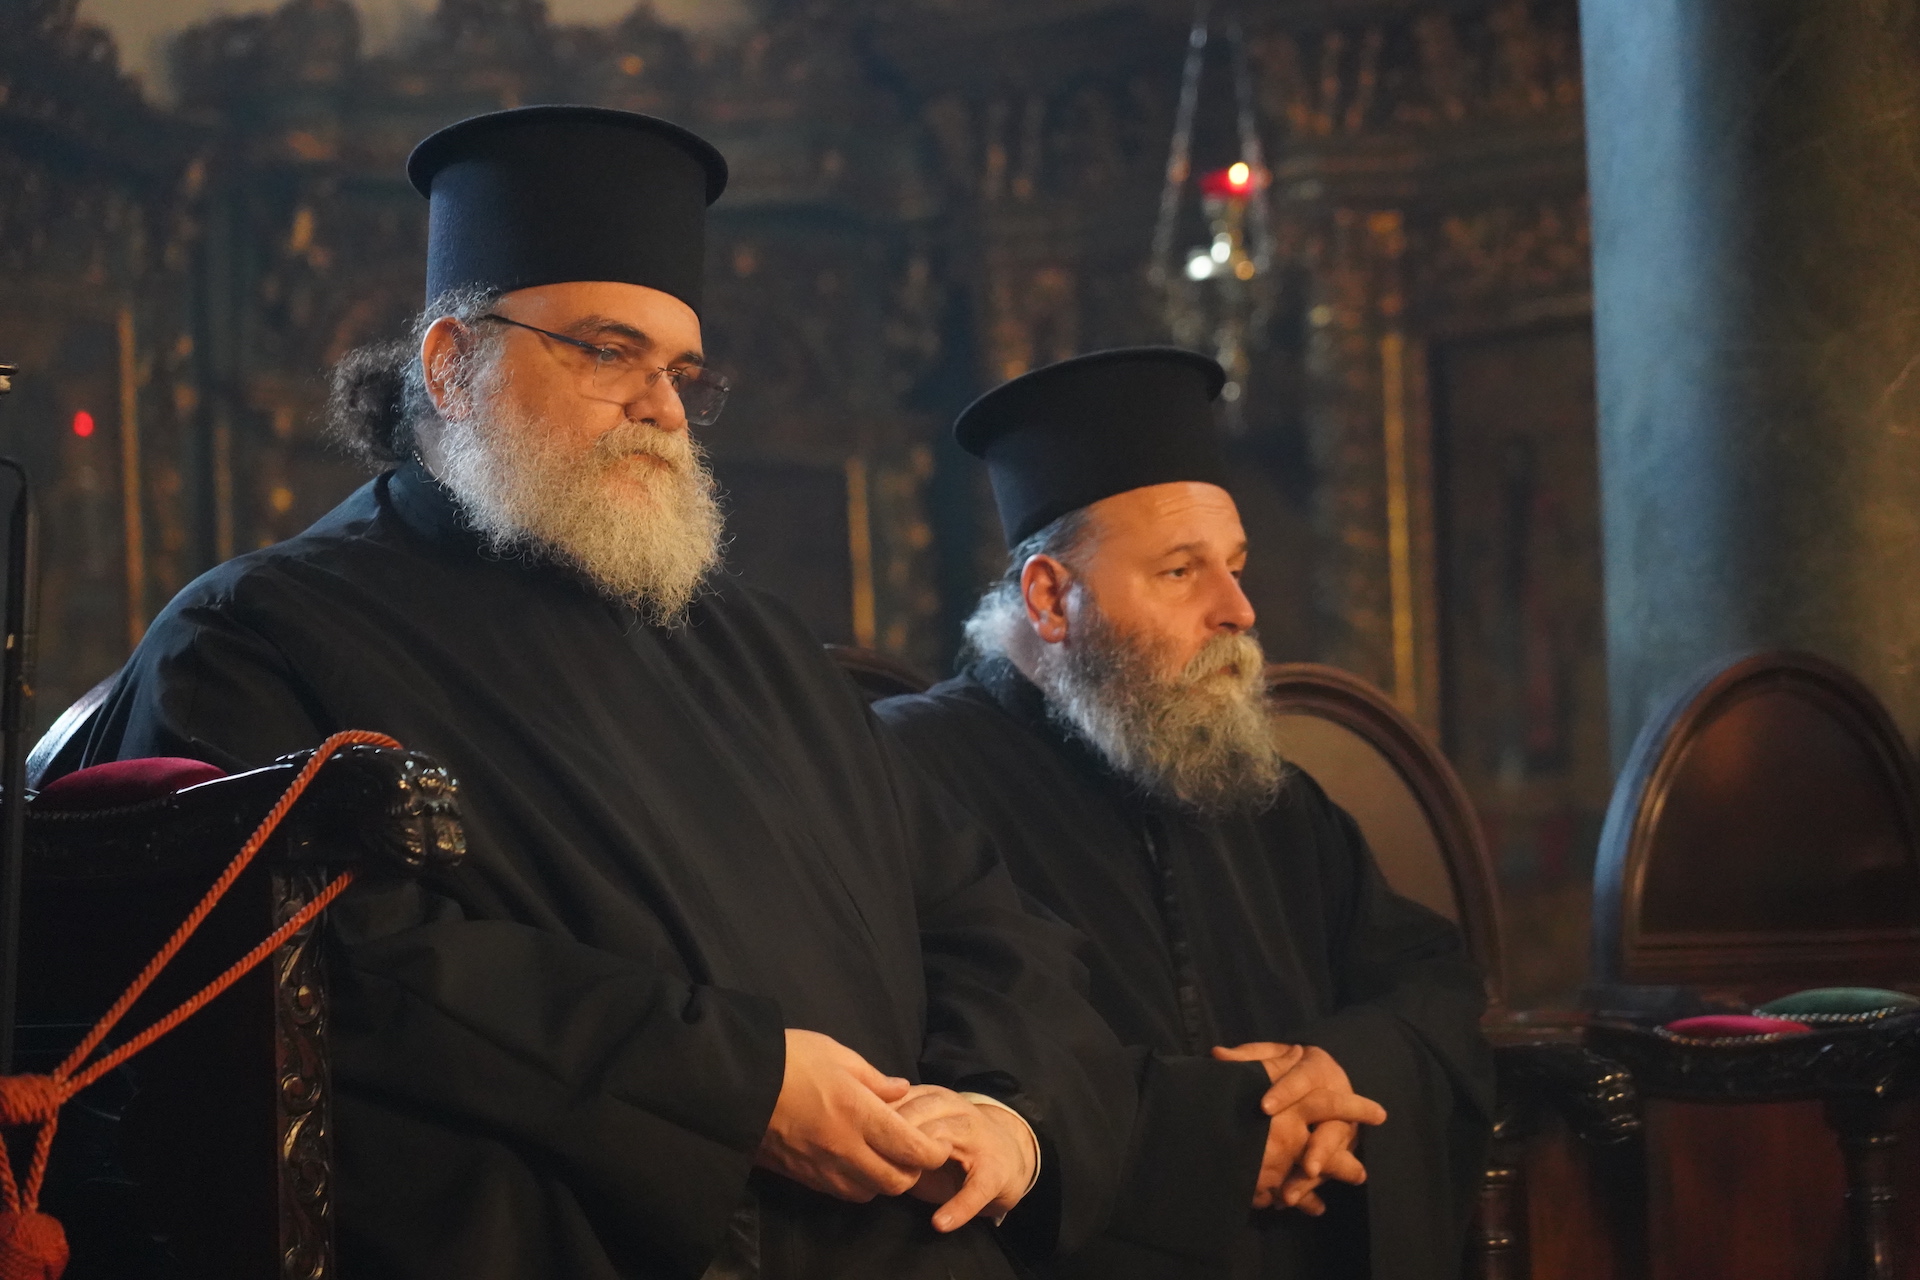 The Ecumenical Patriarchate honours the memory of Saint John Chrysostom